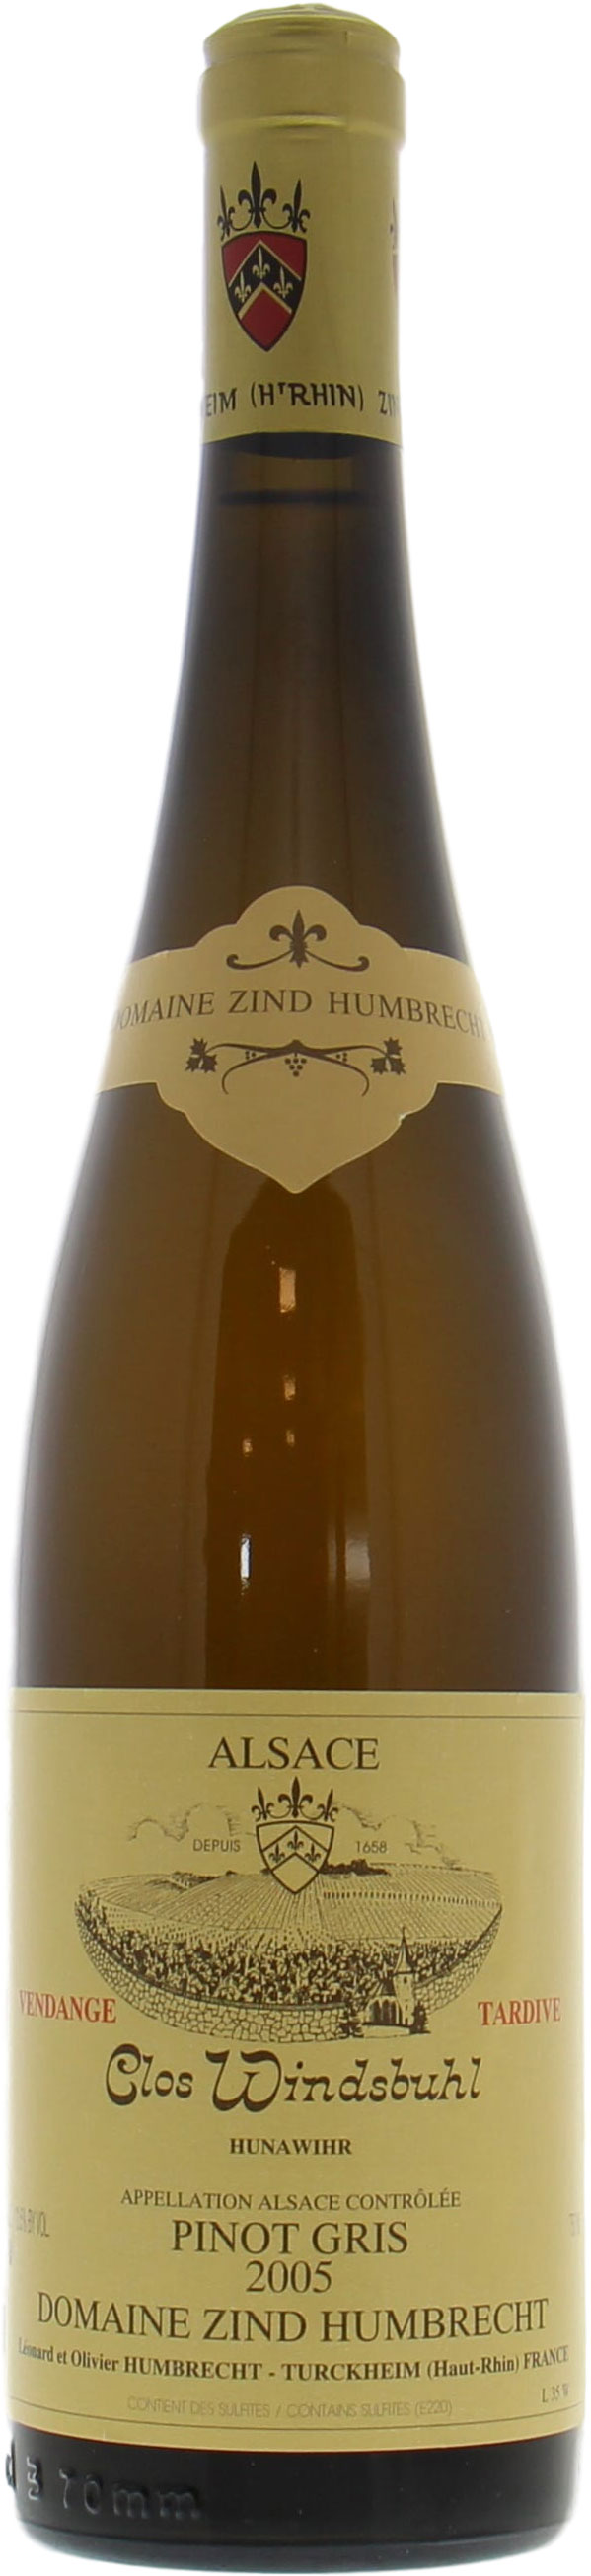 Zind Humbrecht - Pinot Gris Clos Windsbuhl Vendange Tardive 2005 Perfect